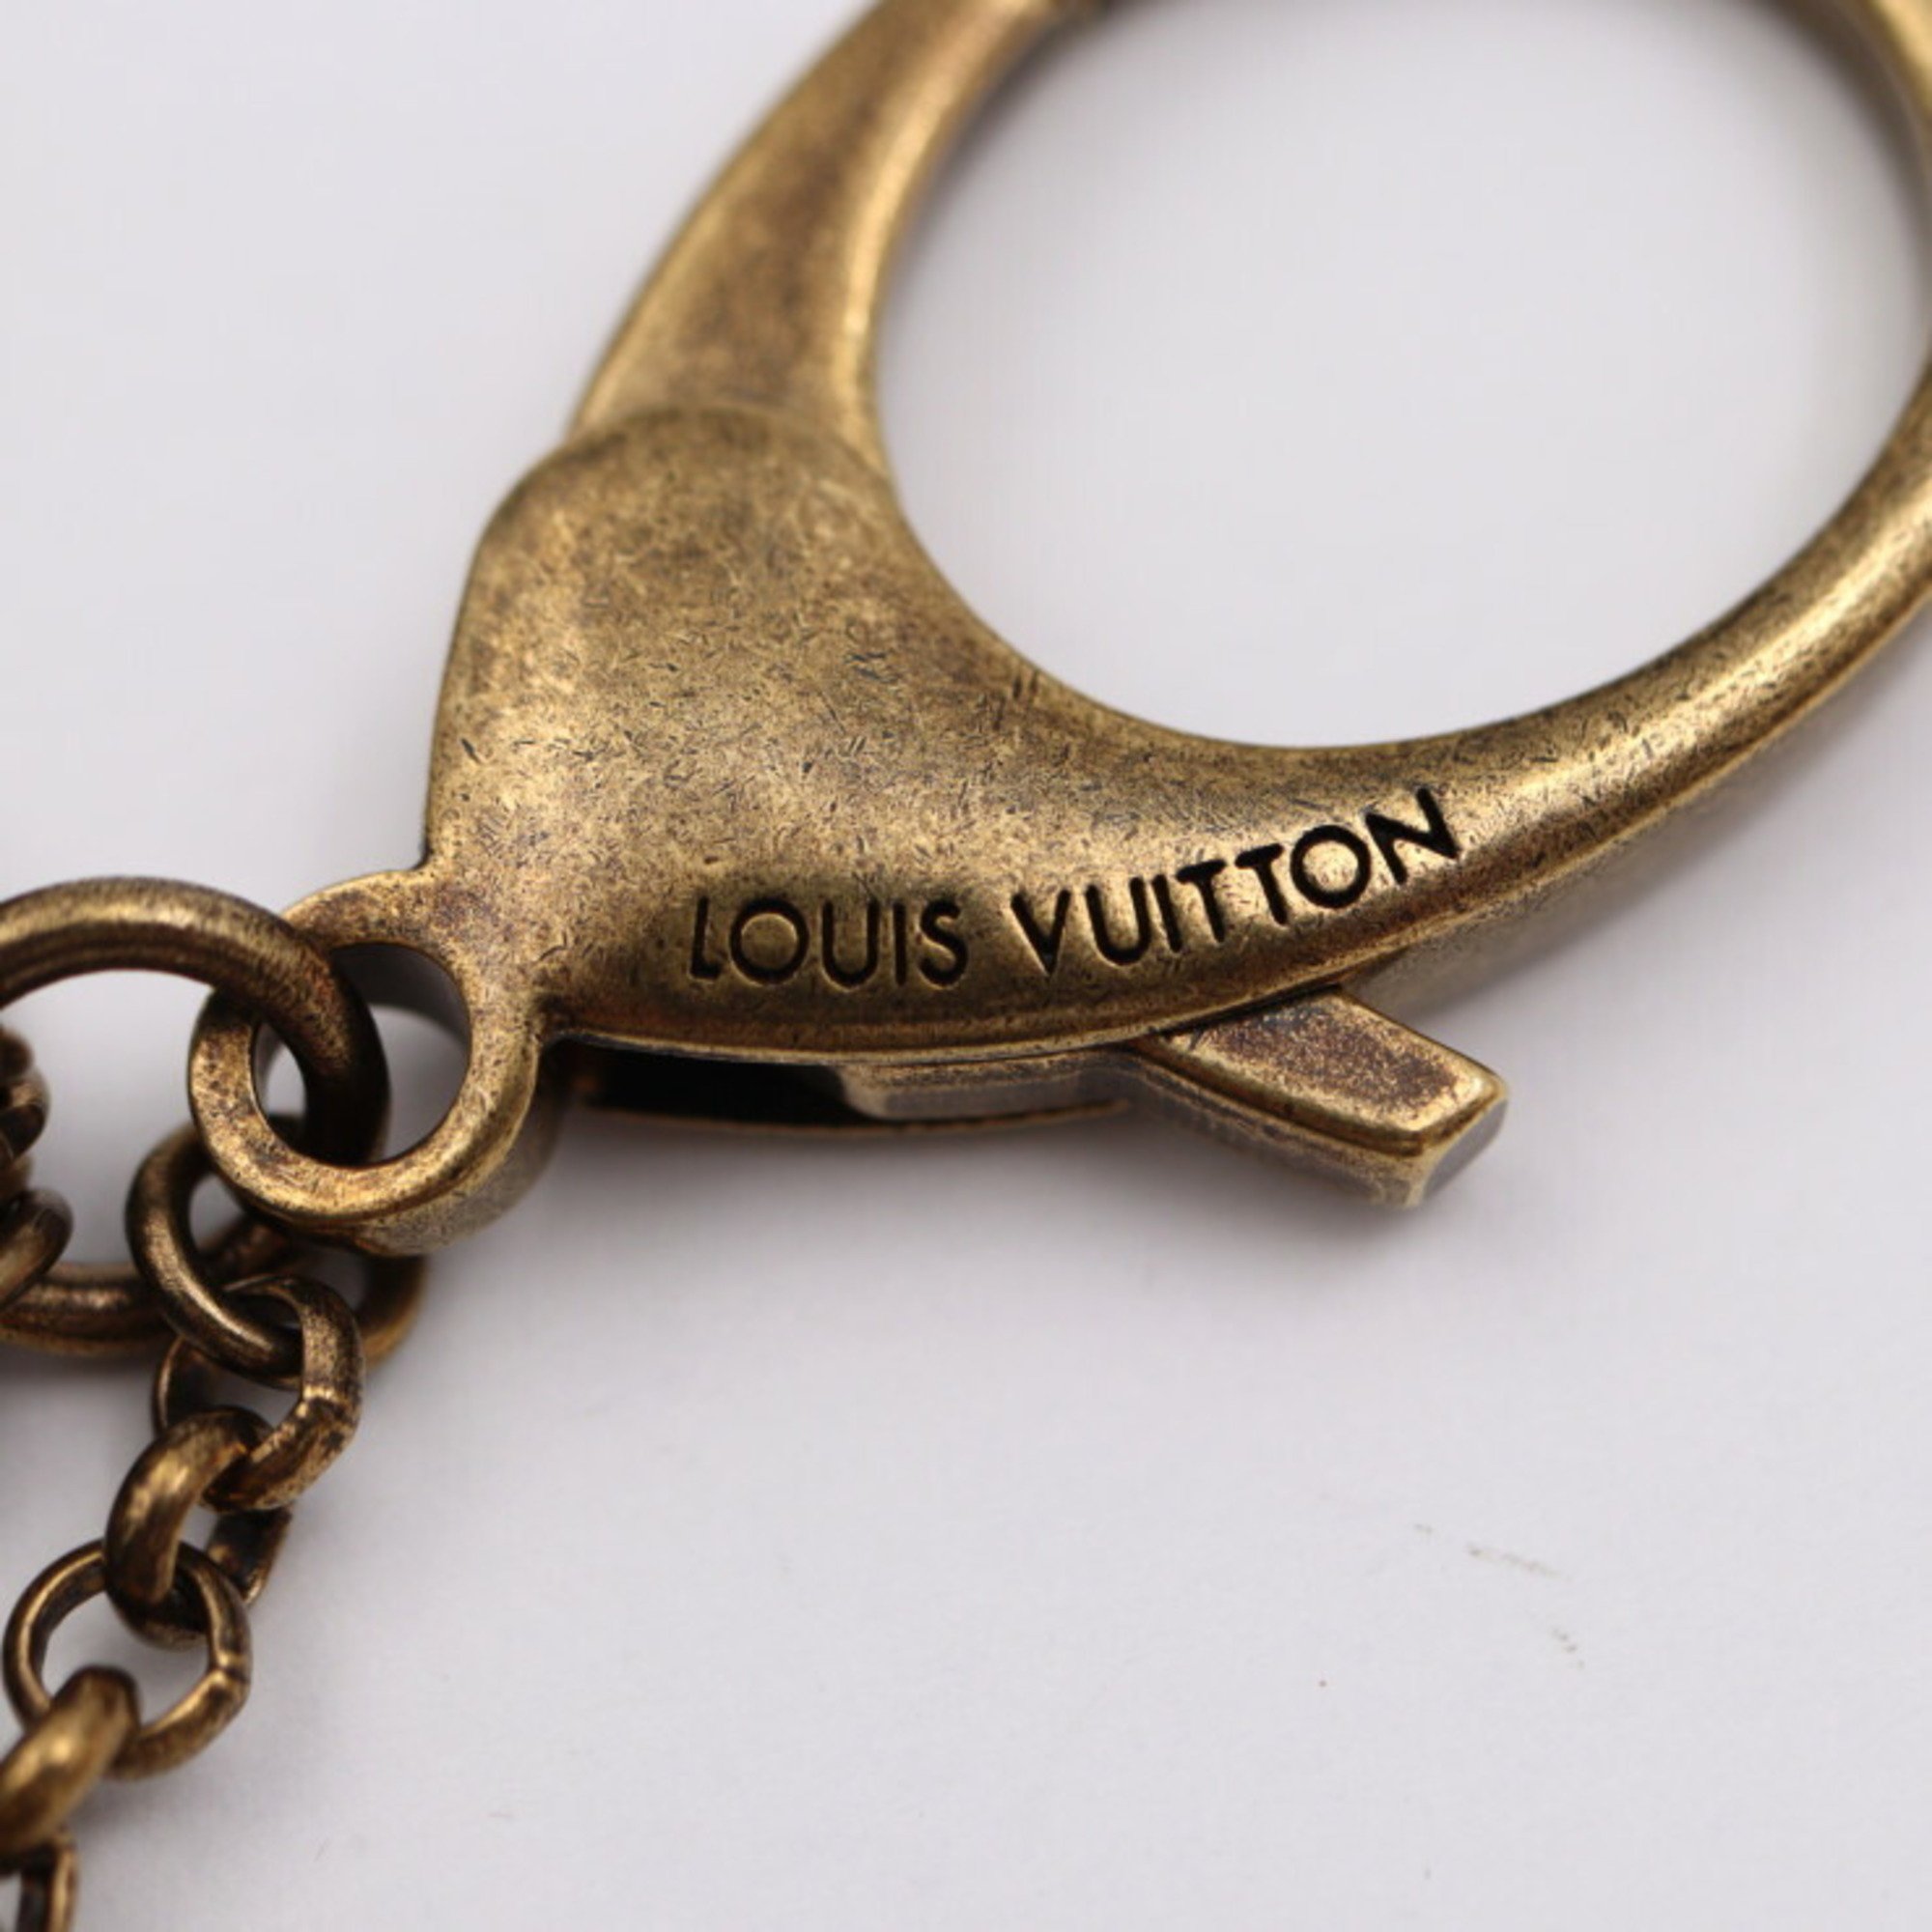 LOUIS VUITTON Louis Vuitton bijou sack calypse key holder M65724 metal rhinestone vintage gold LV logo